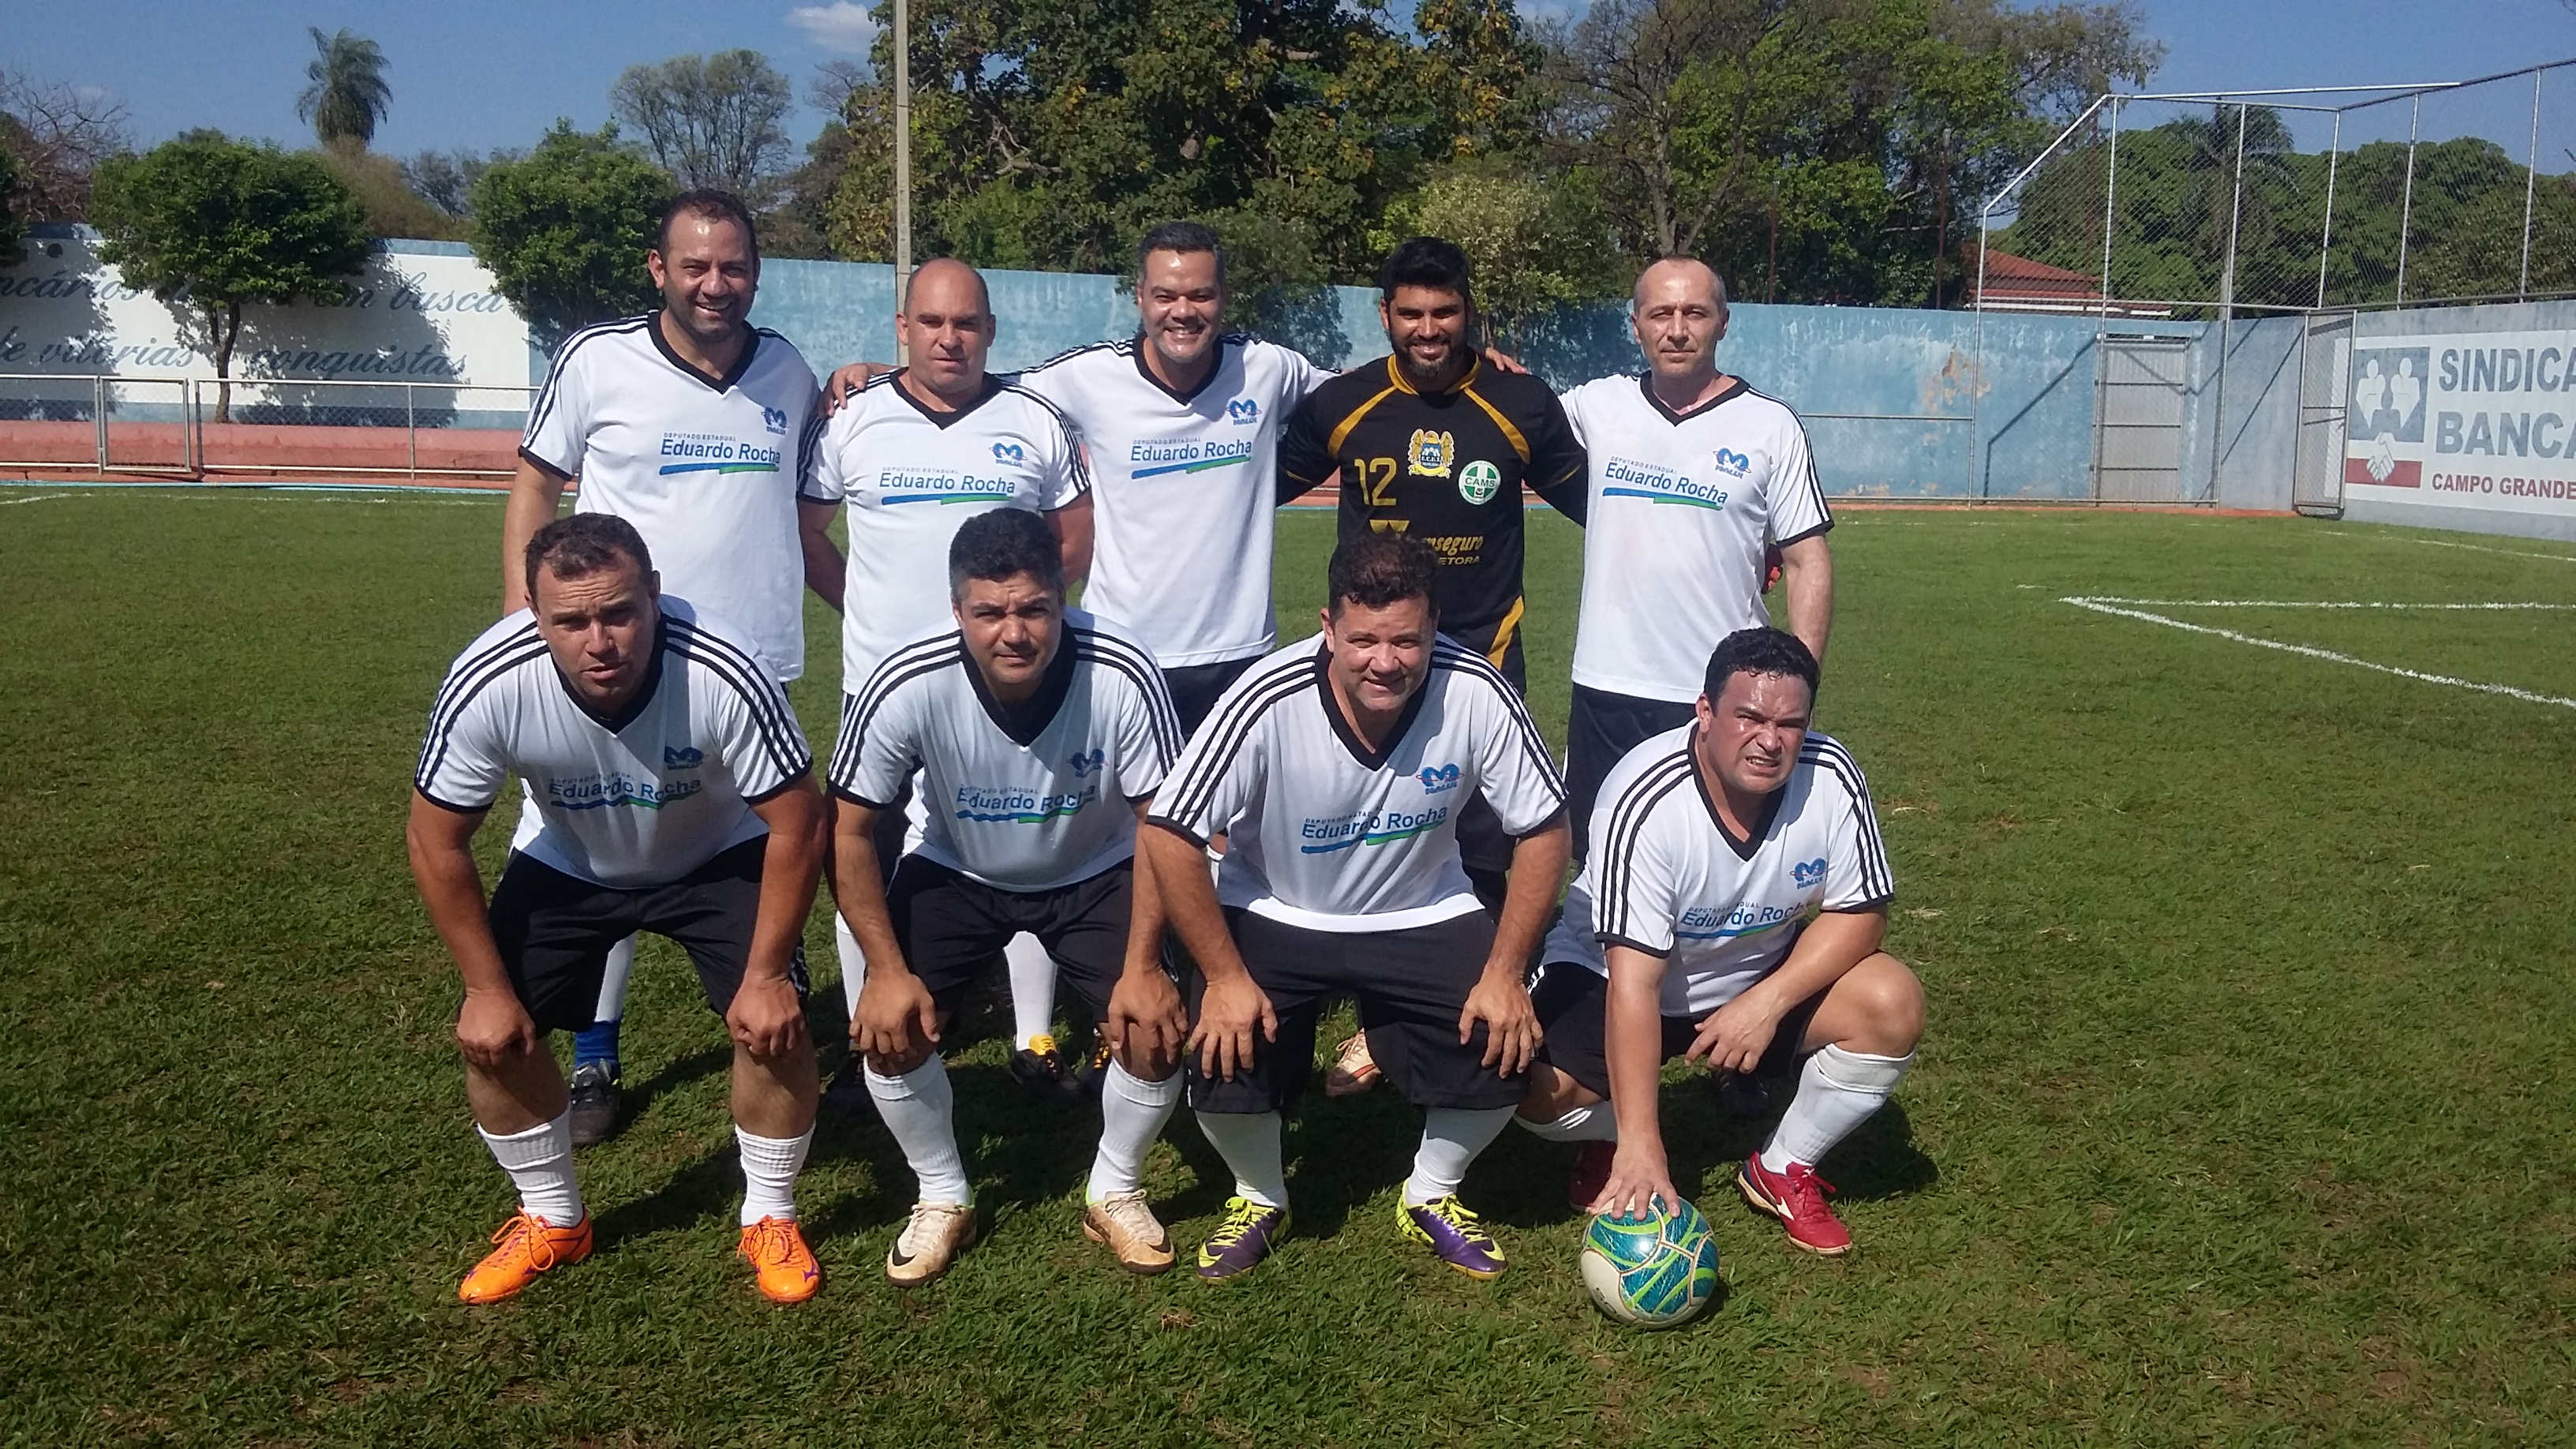 SindicarioNET - Confira os resultados da 1ª rodada da VII Copa de Futebol 7  Society dos Bancários